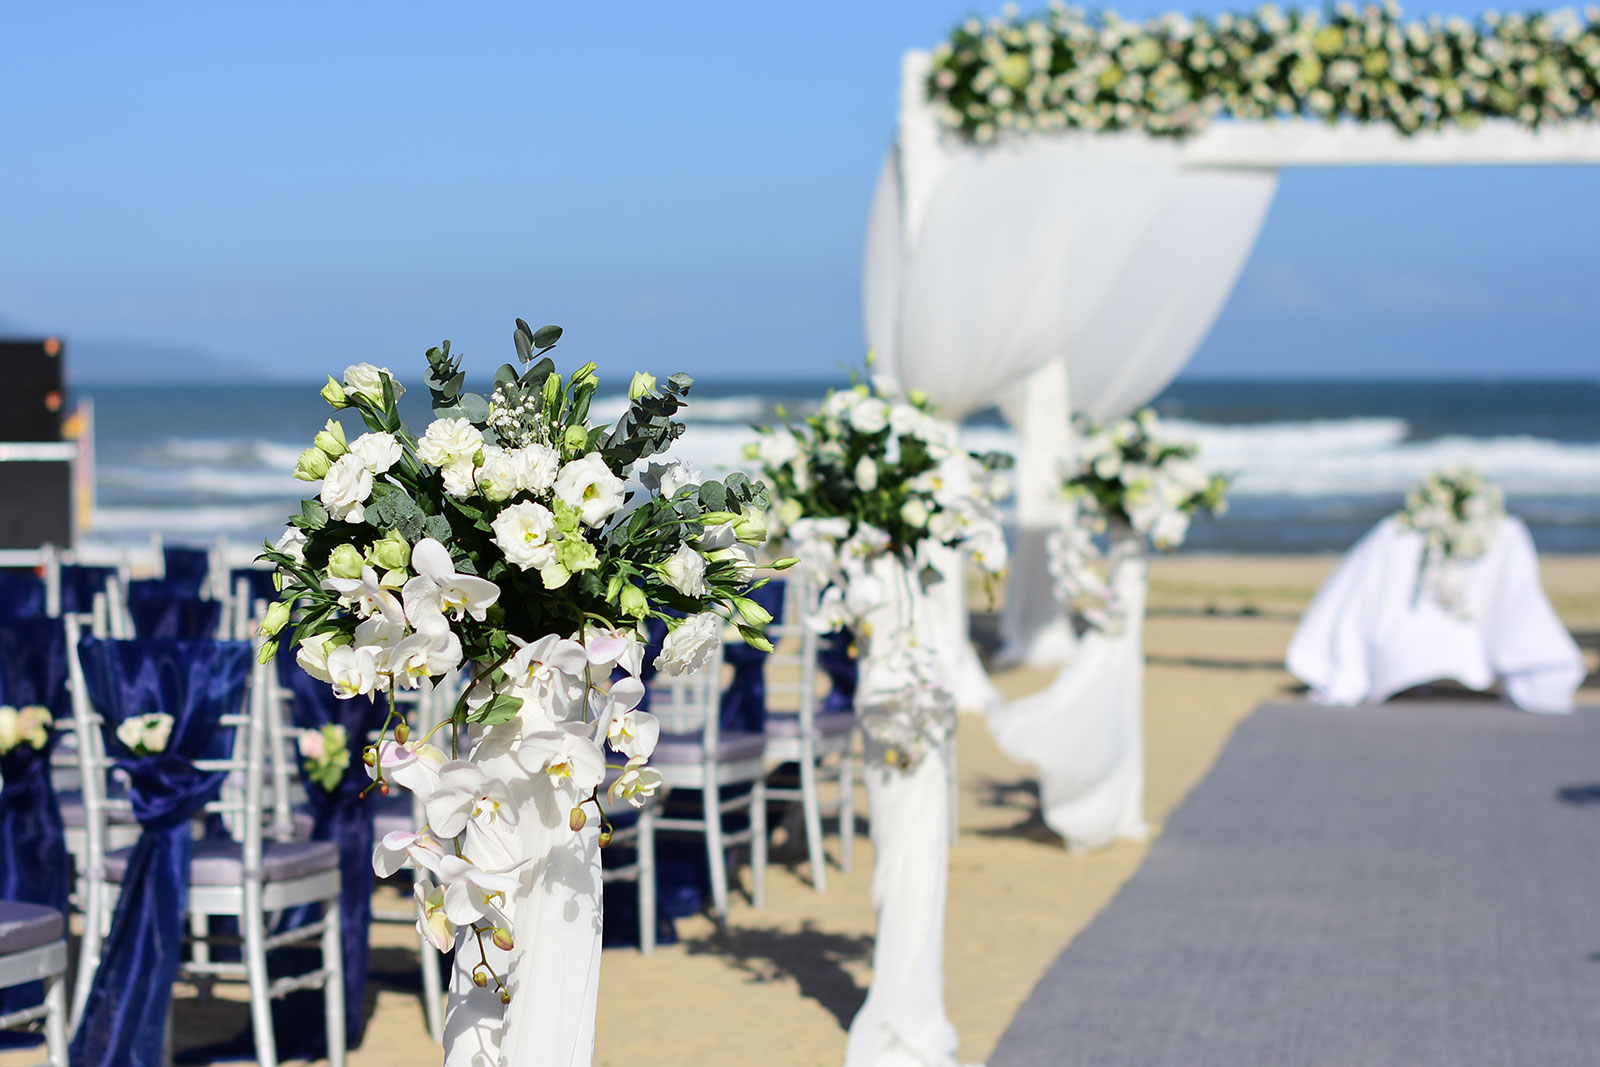 WEDDING AT FURAMA BEACH | 2020